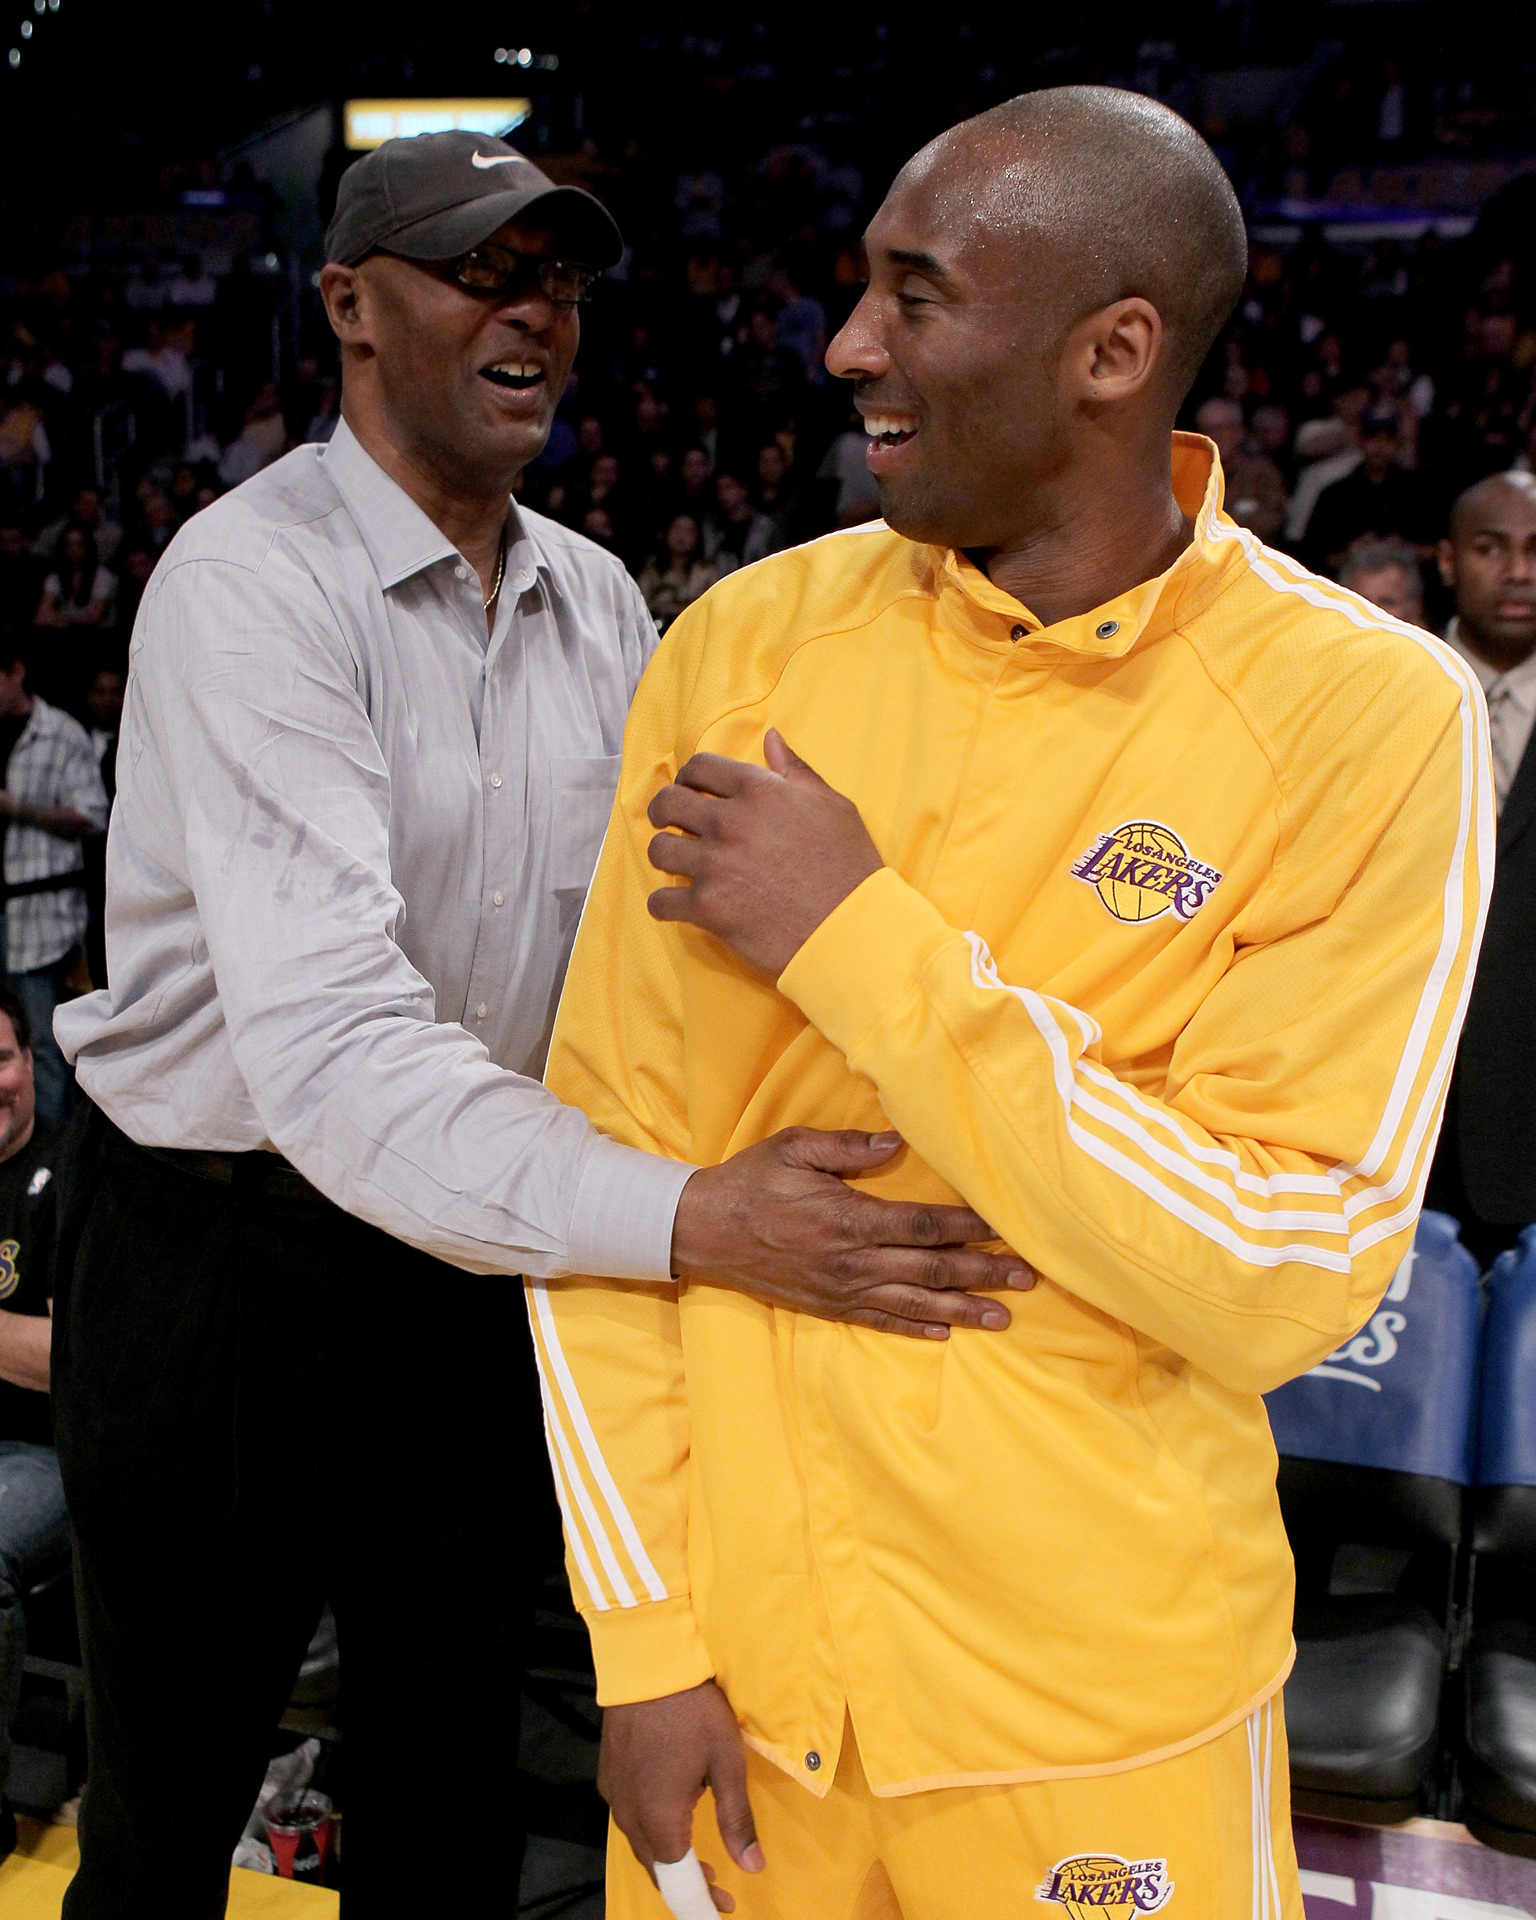 Kobe Bryant - Kobe Bryant's Life in Photos - ESPN